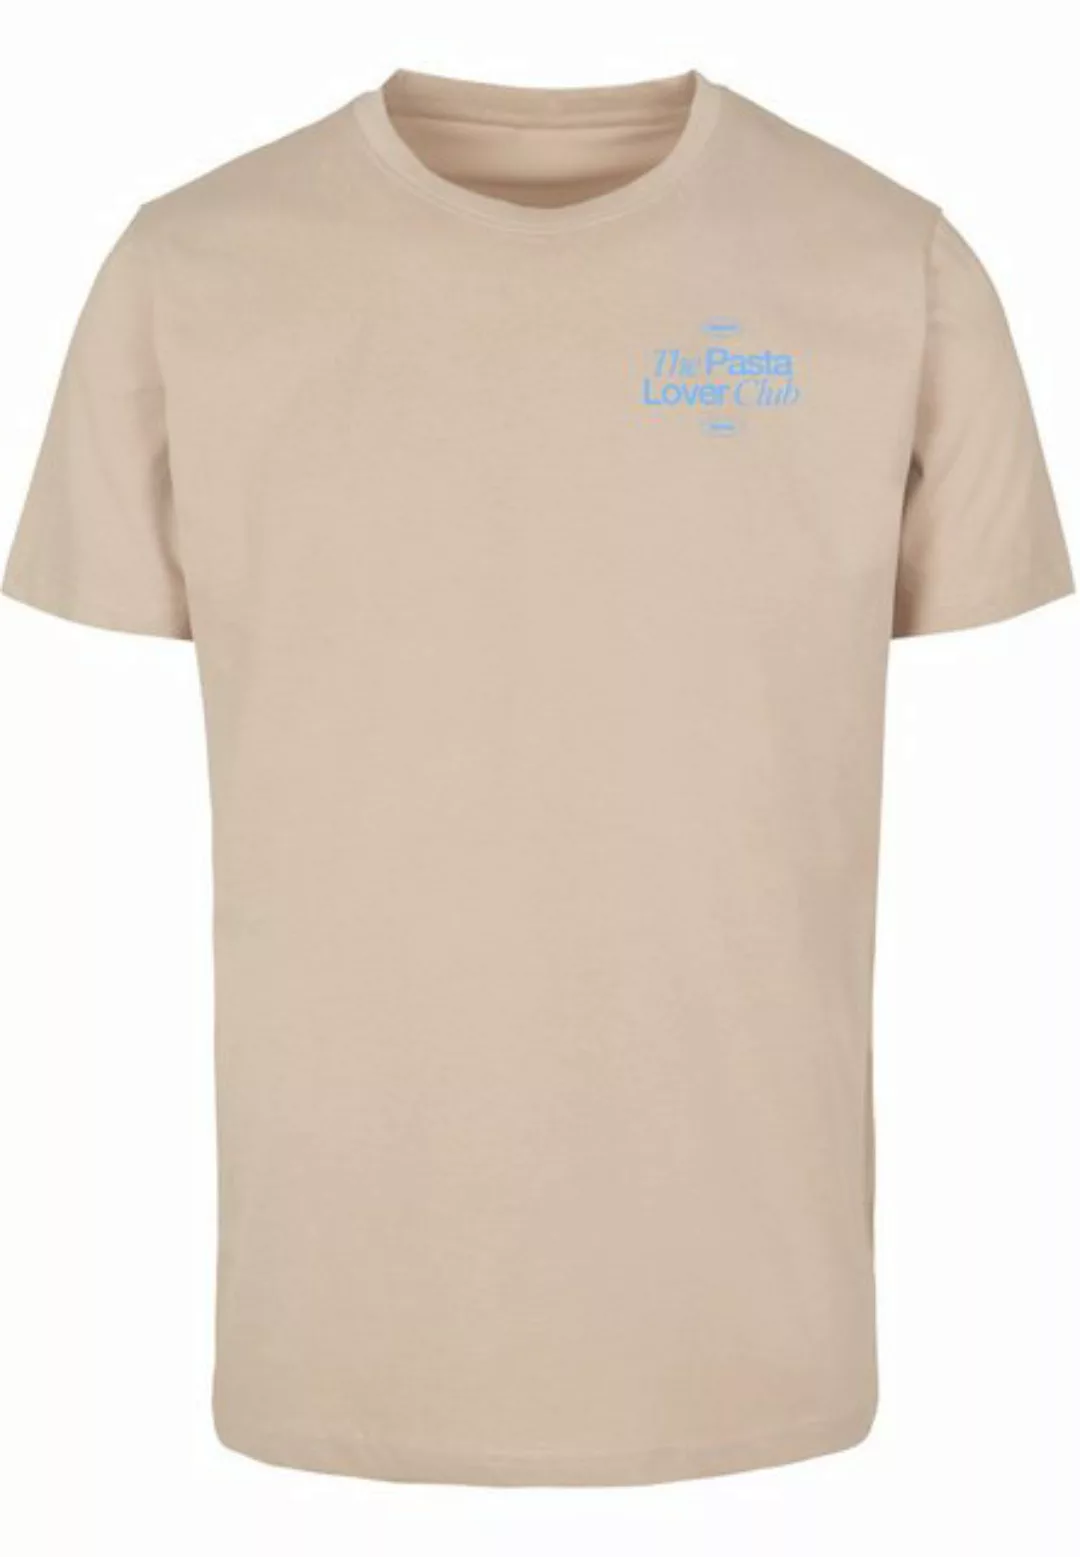 MisterTee T-Shirt MisterTee The Pasta Lover Club Tee (1-tlg) günstig online kaufen